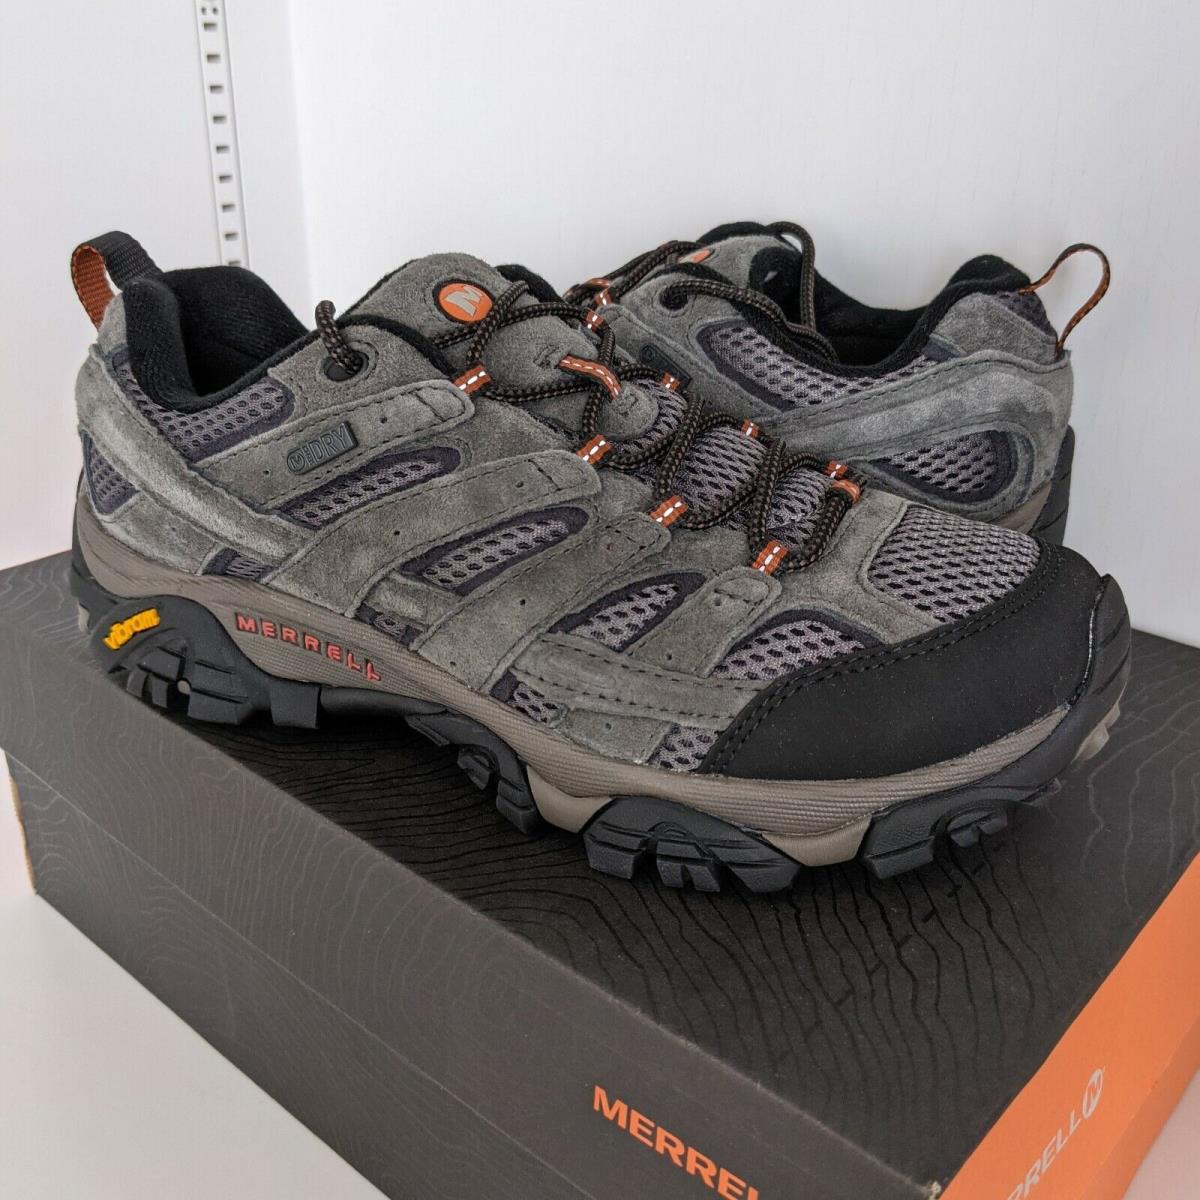 Merrell Moab 2 Waterproof Mens Hiking Shoes - Beluga Size 8 M - with Box